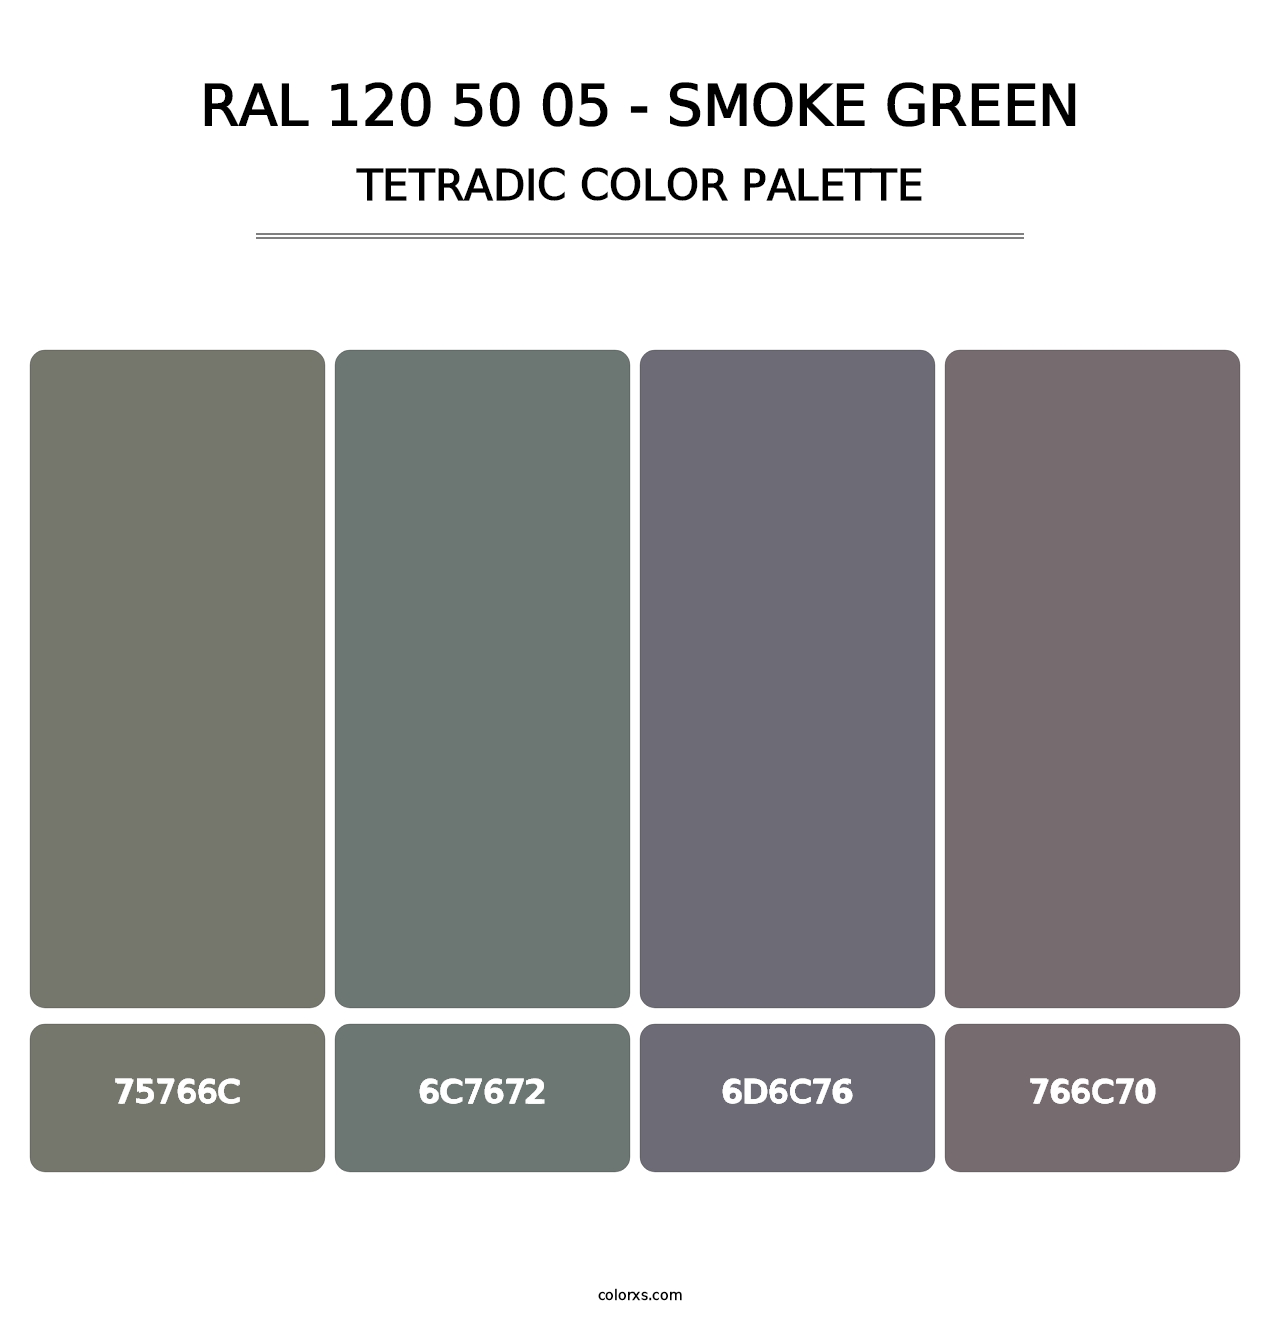 RAL 120 50 05 - Smoke Green - Tetradic Color Palette